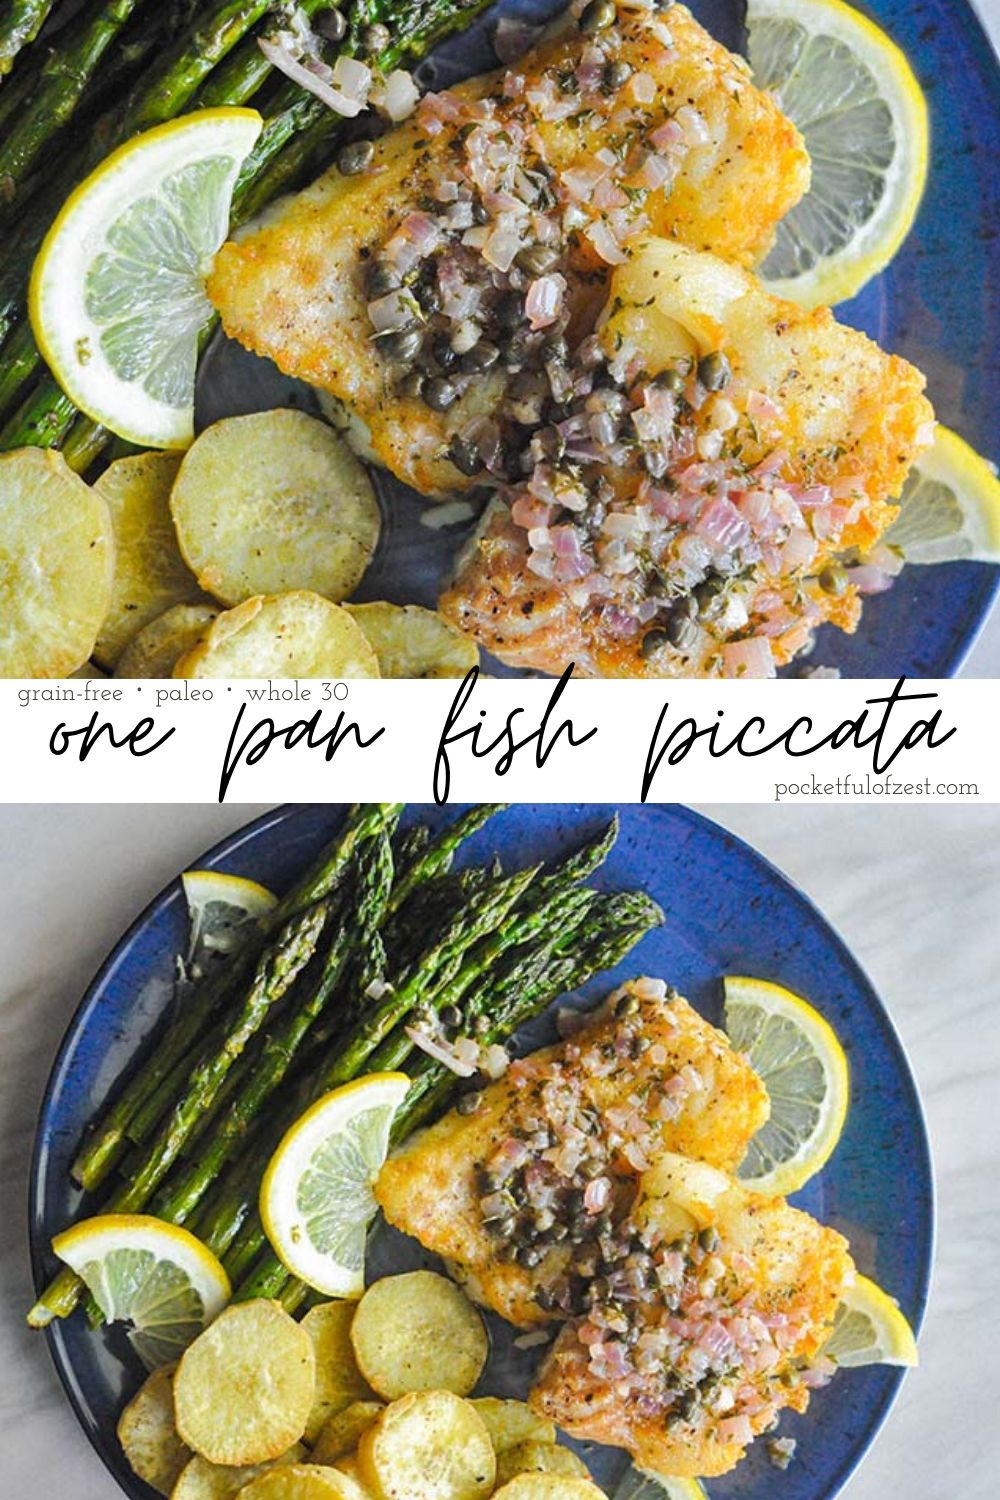 one pan fish piccata pin recipe image